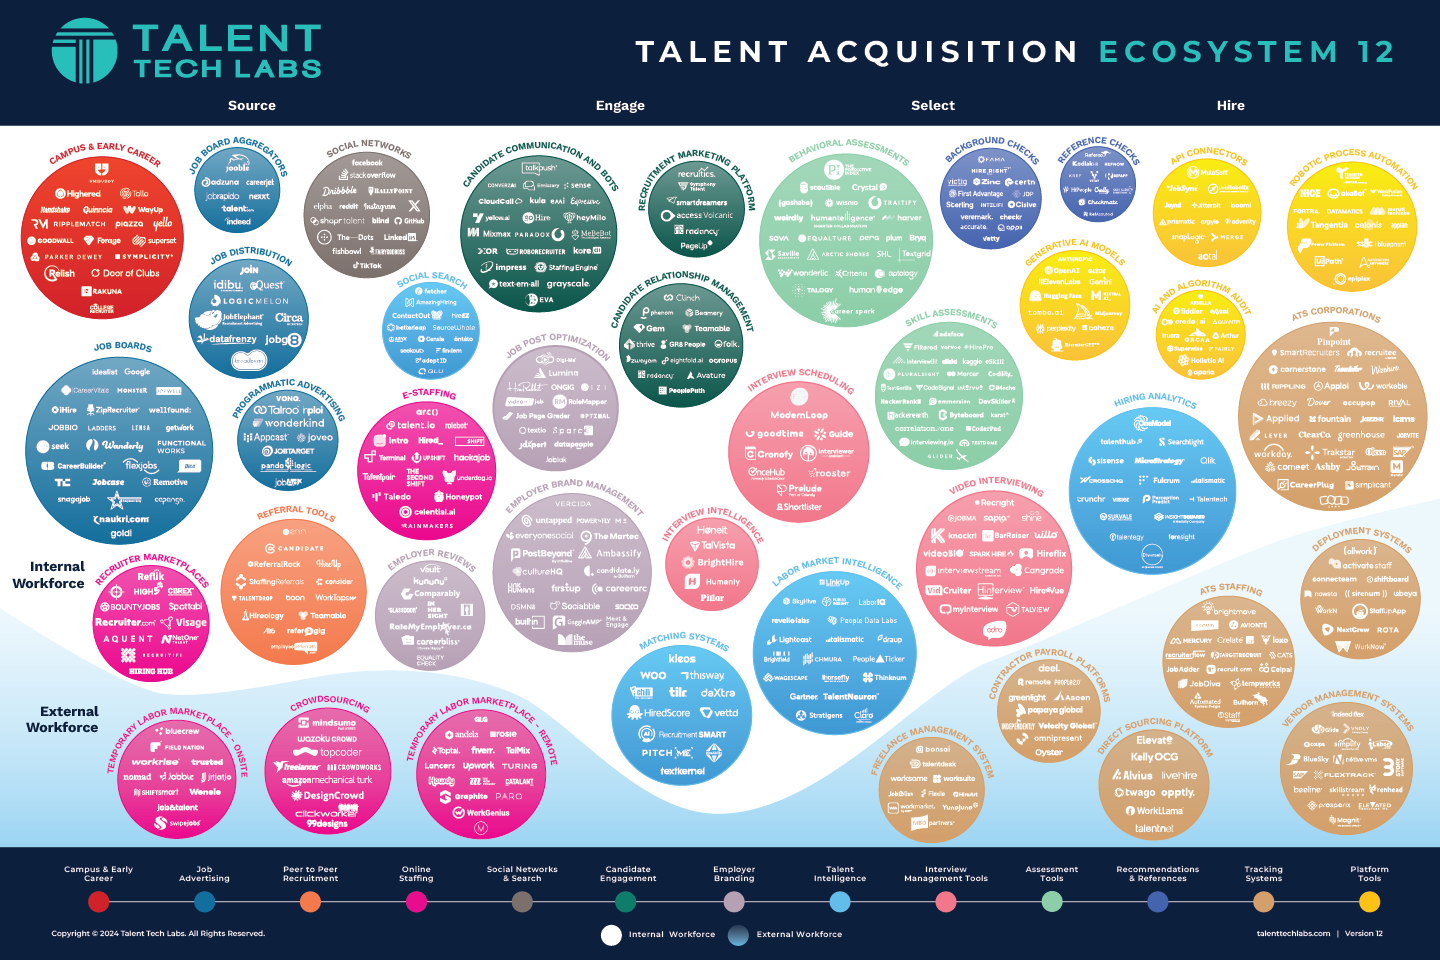 Talent Tech Labs' Talent Acquisition Ecosystem 12 Infographic